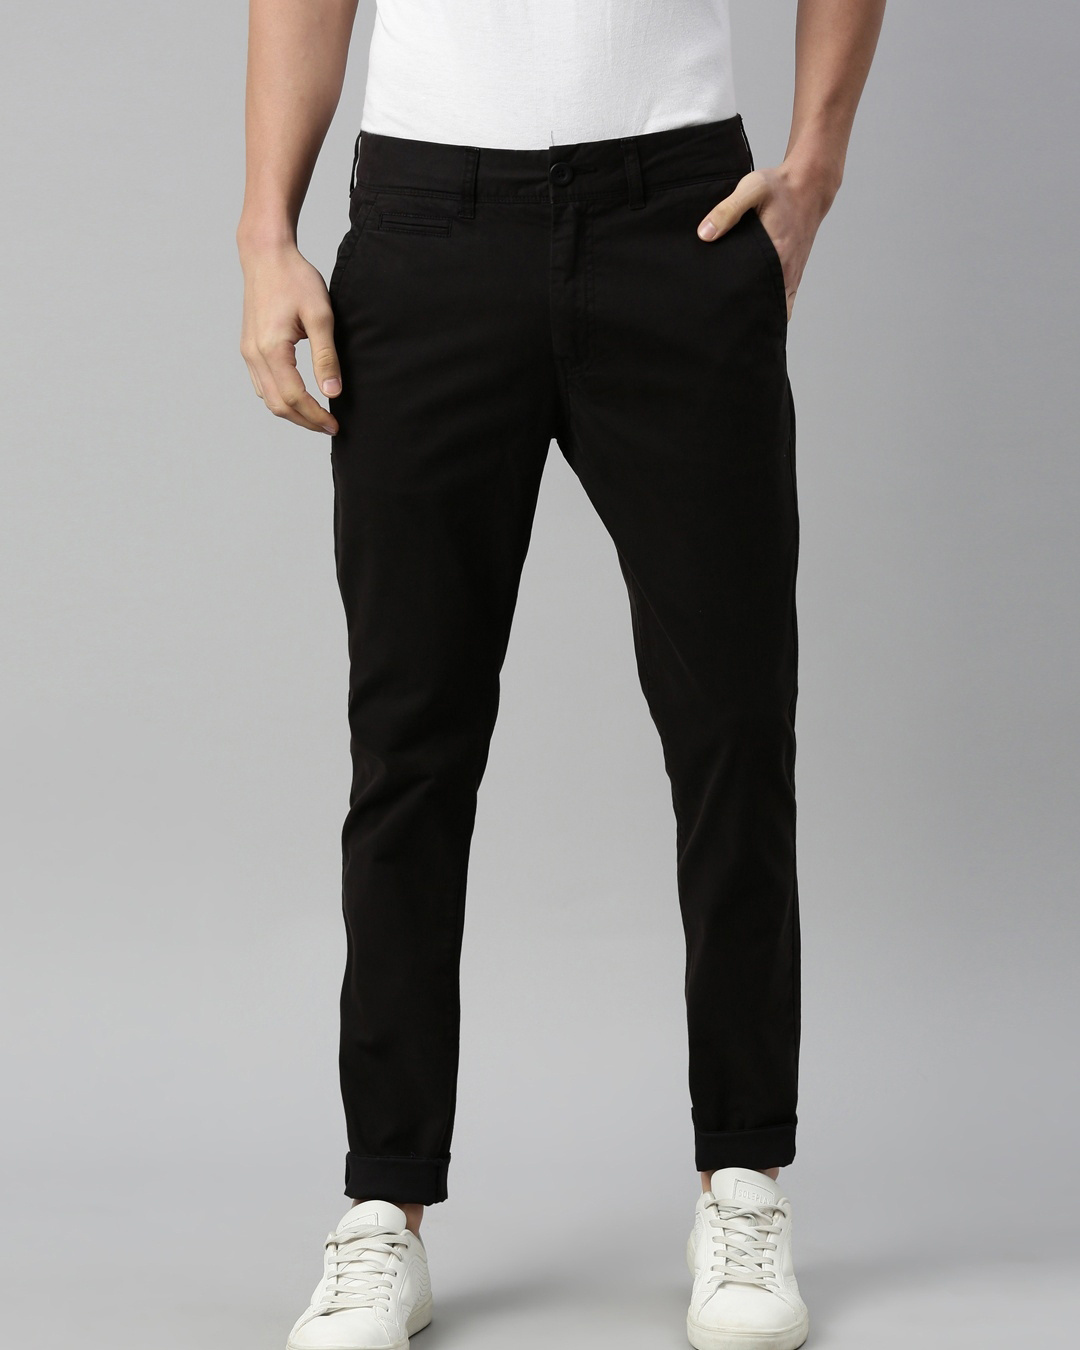 Buy Ketch Jet Black Slim Fit Chinos Trouser for Men Online at Rs559  Ketch